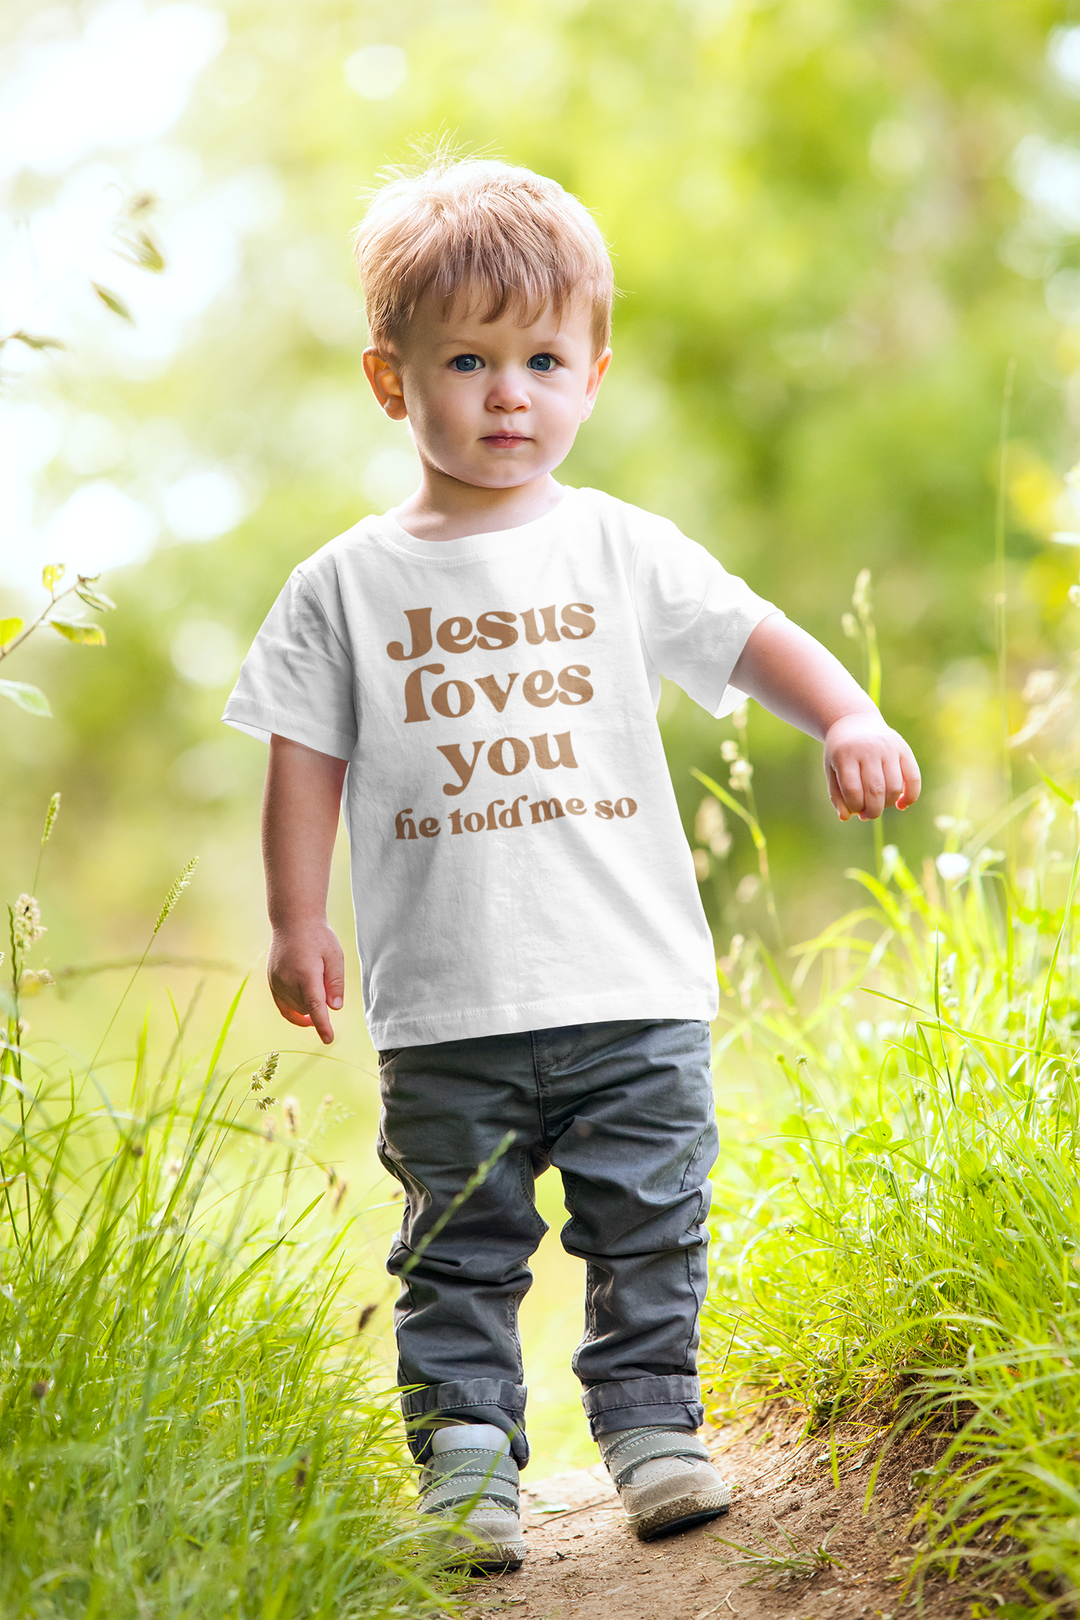 Jesus Loves You Retro Bodysuit or Tee